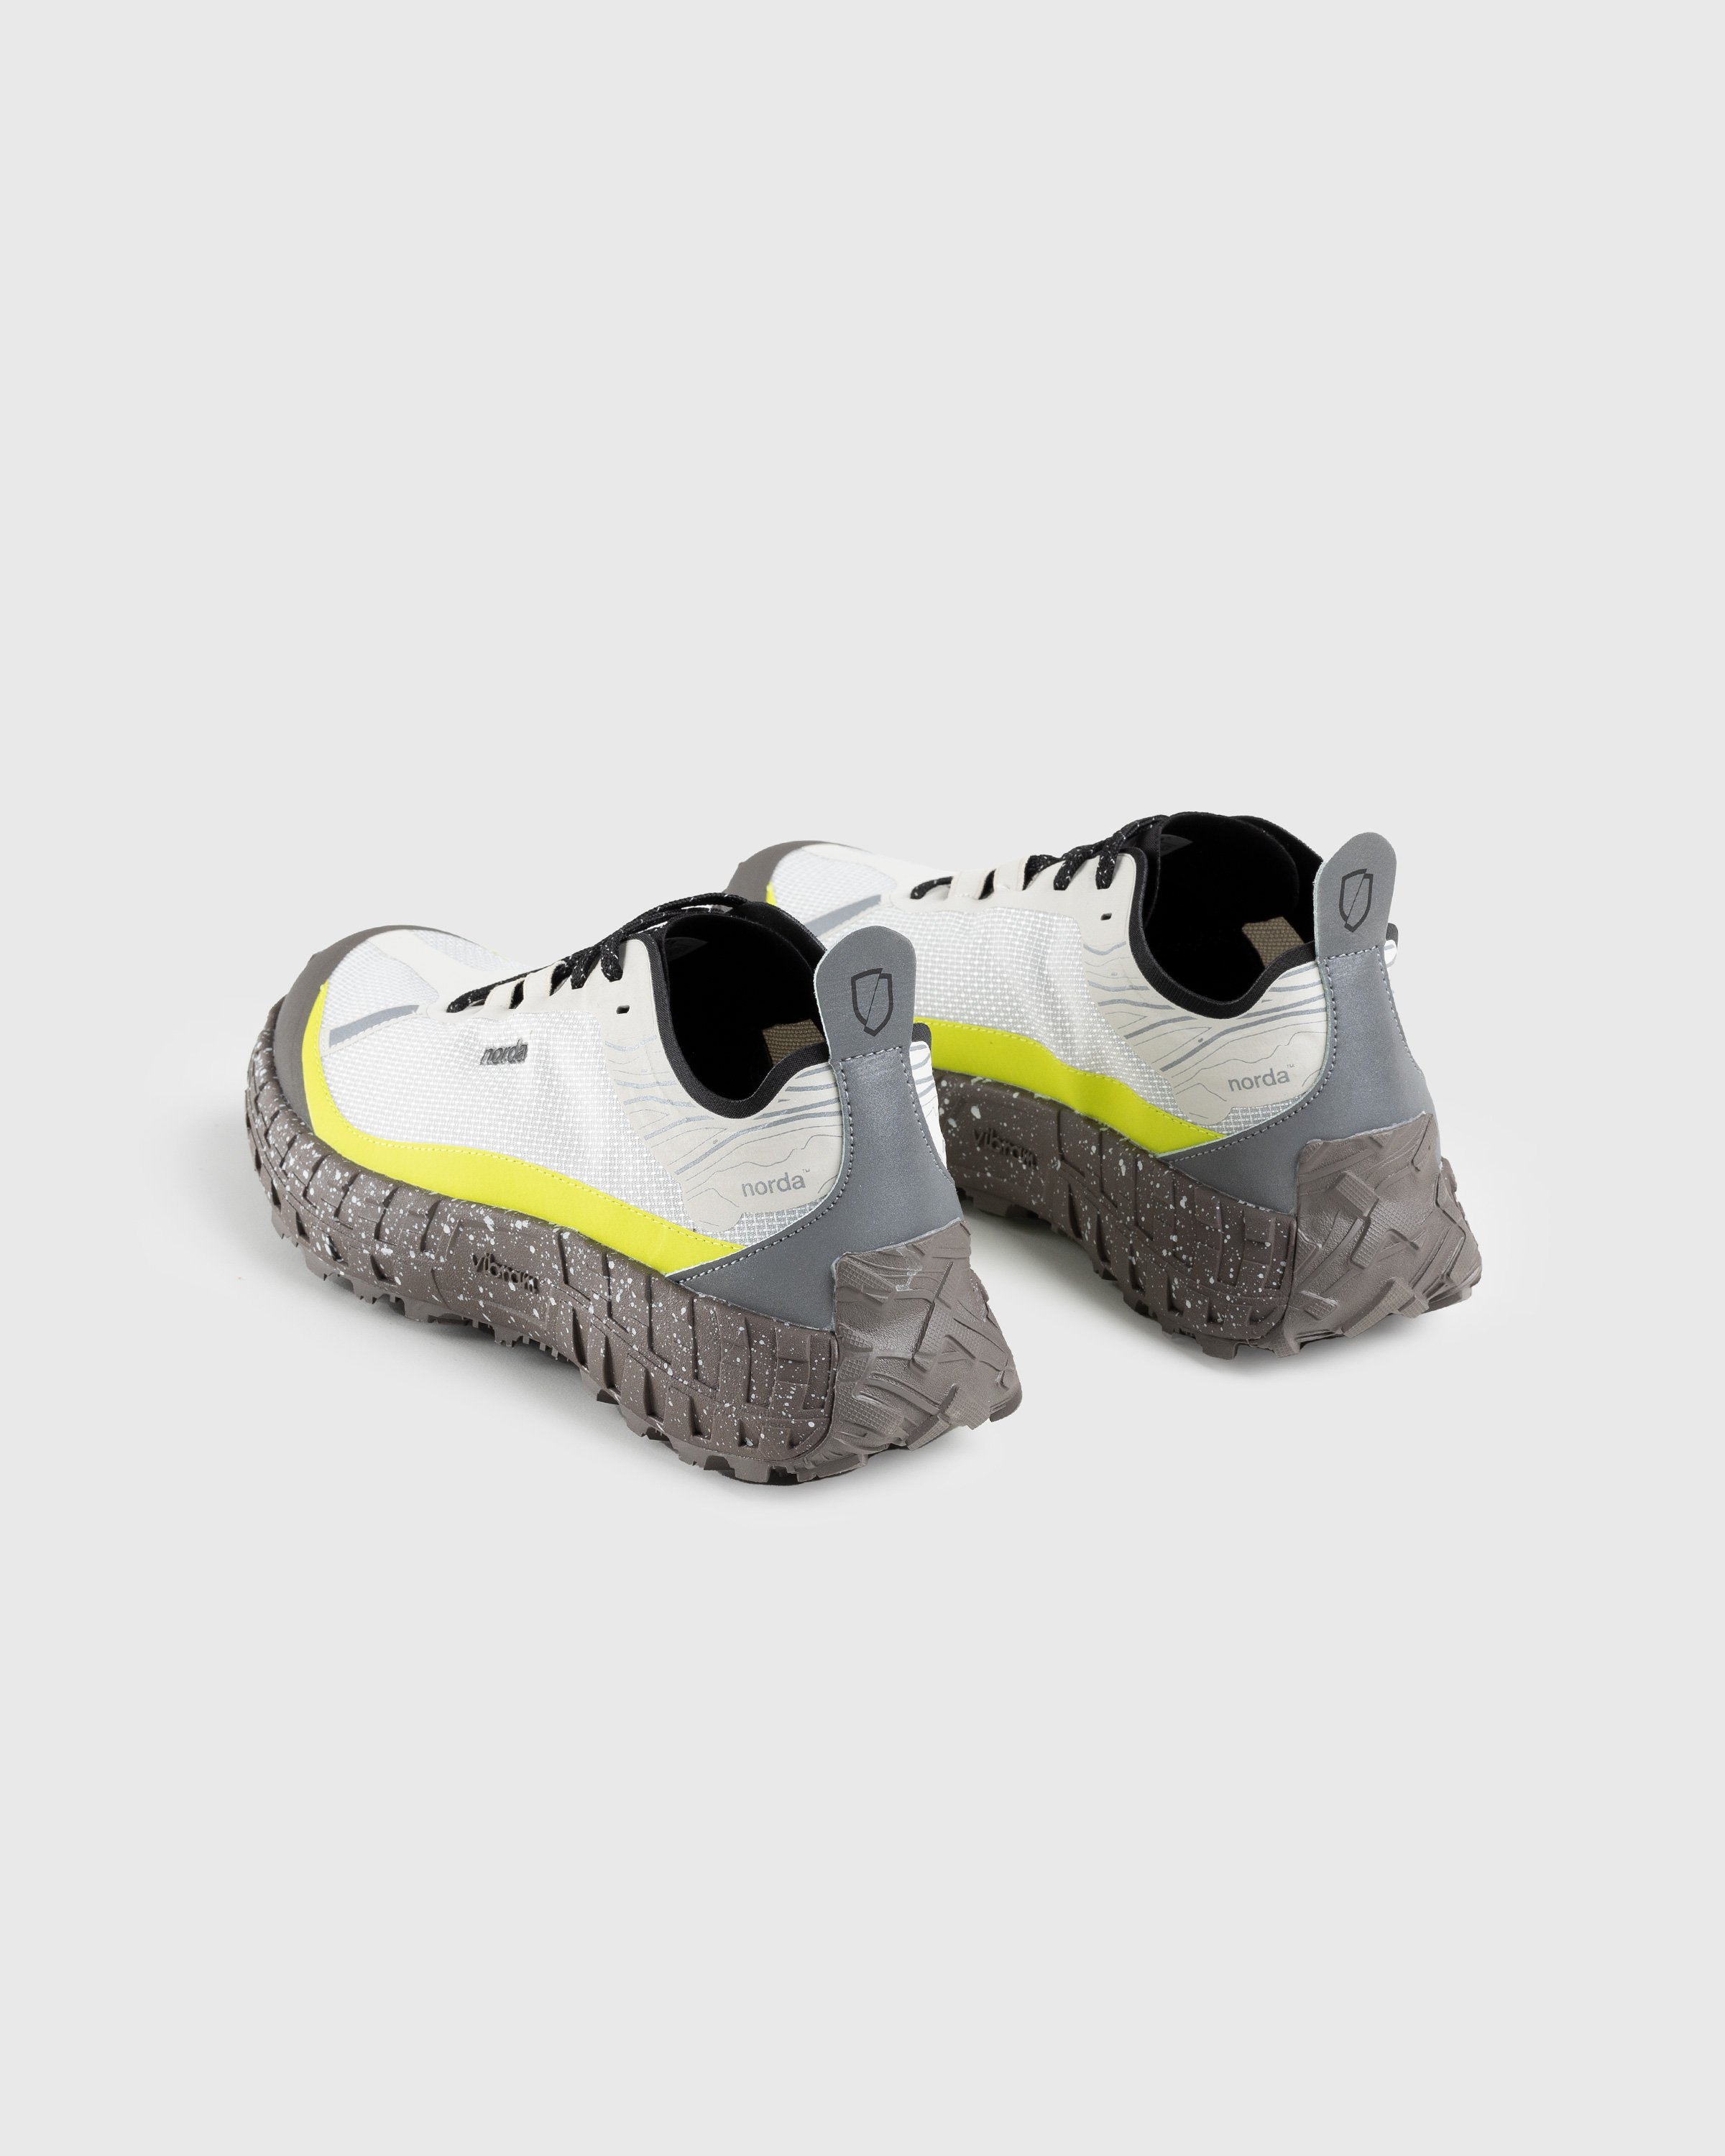 Norda - 001 M LTD Edition Icicle - Footwear - Grey - Image 4